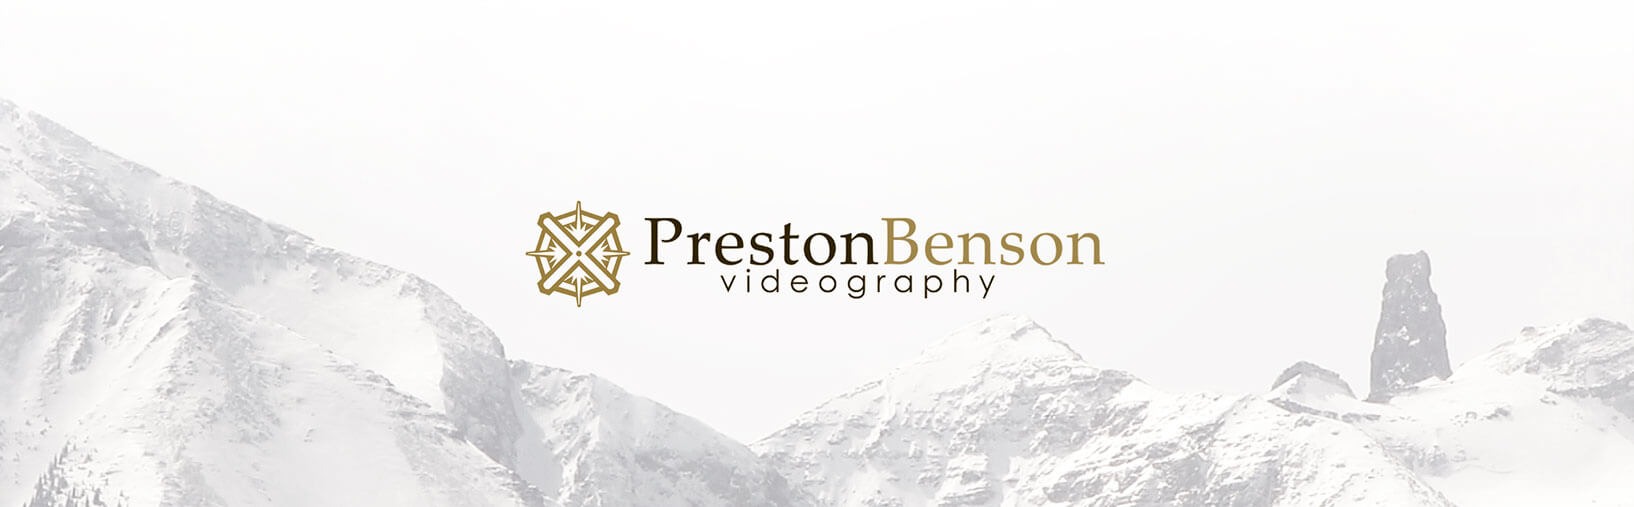 Preston Benson Videography